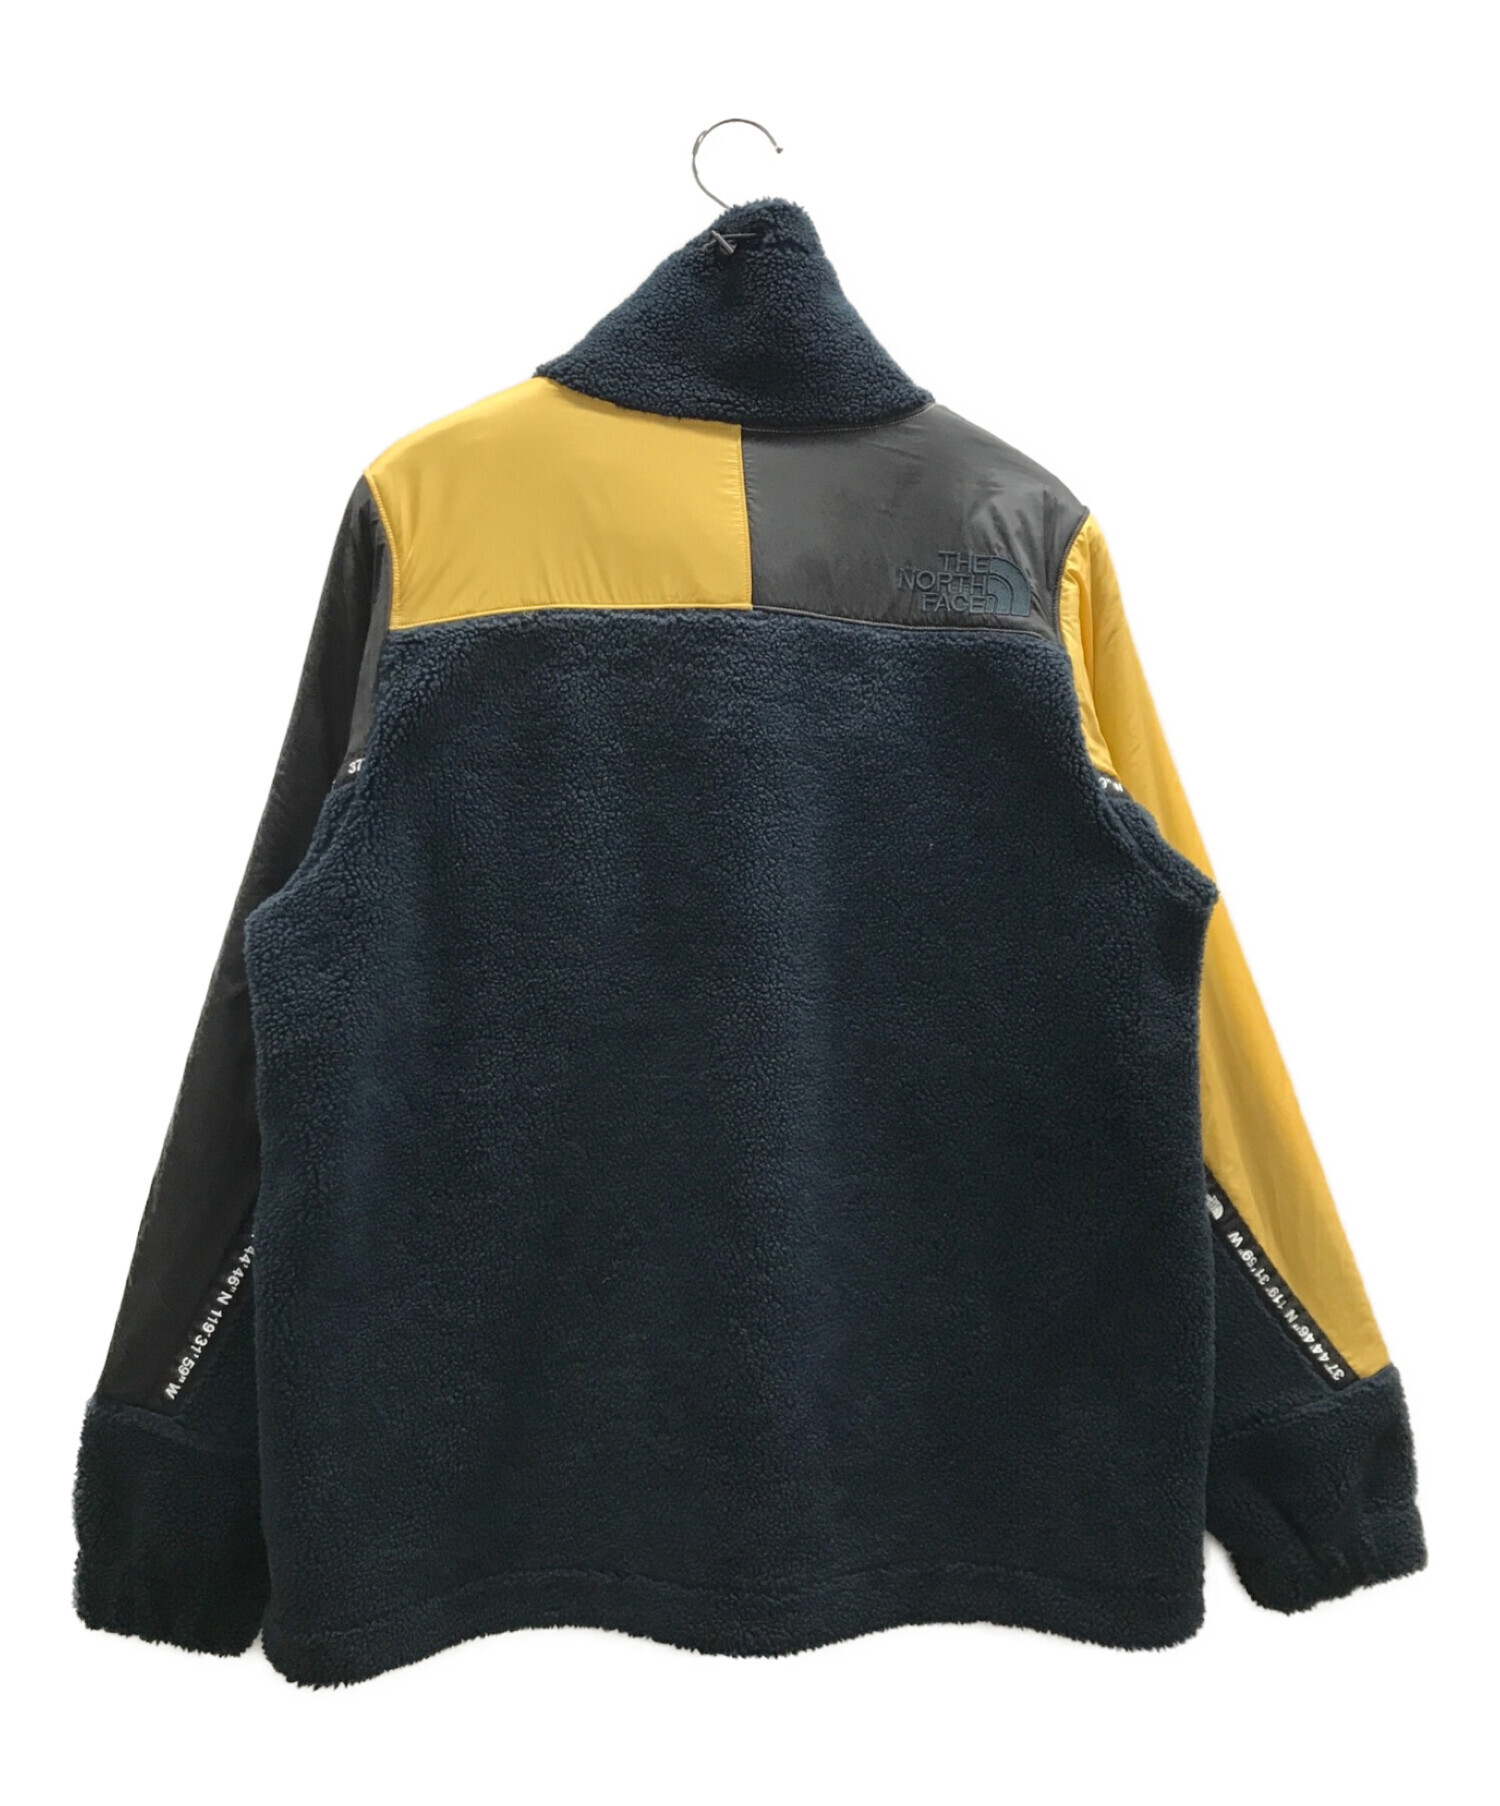 THE NORTH FACE×Kazuki Kuraishi (ザノースフェイス×カズキクライシ) High Neck Fleece  Jacket（ハイネックフリースジャケット） ネイビー サイズ:ASIA L